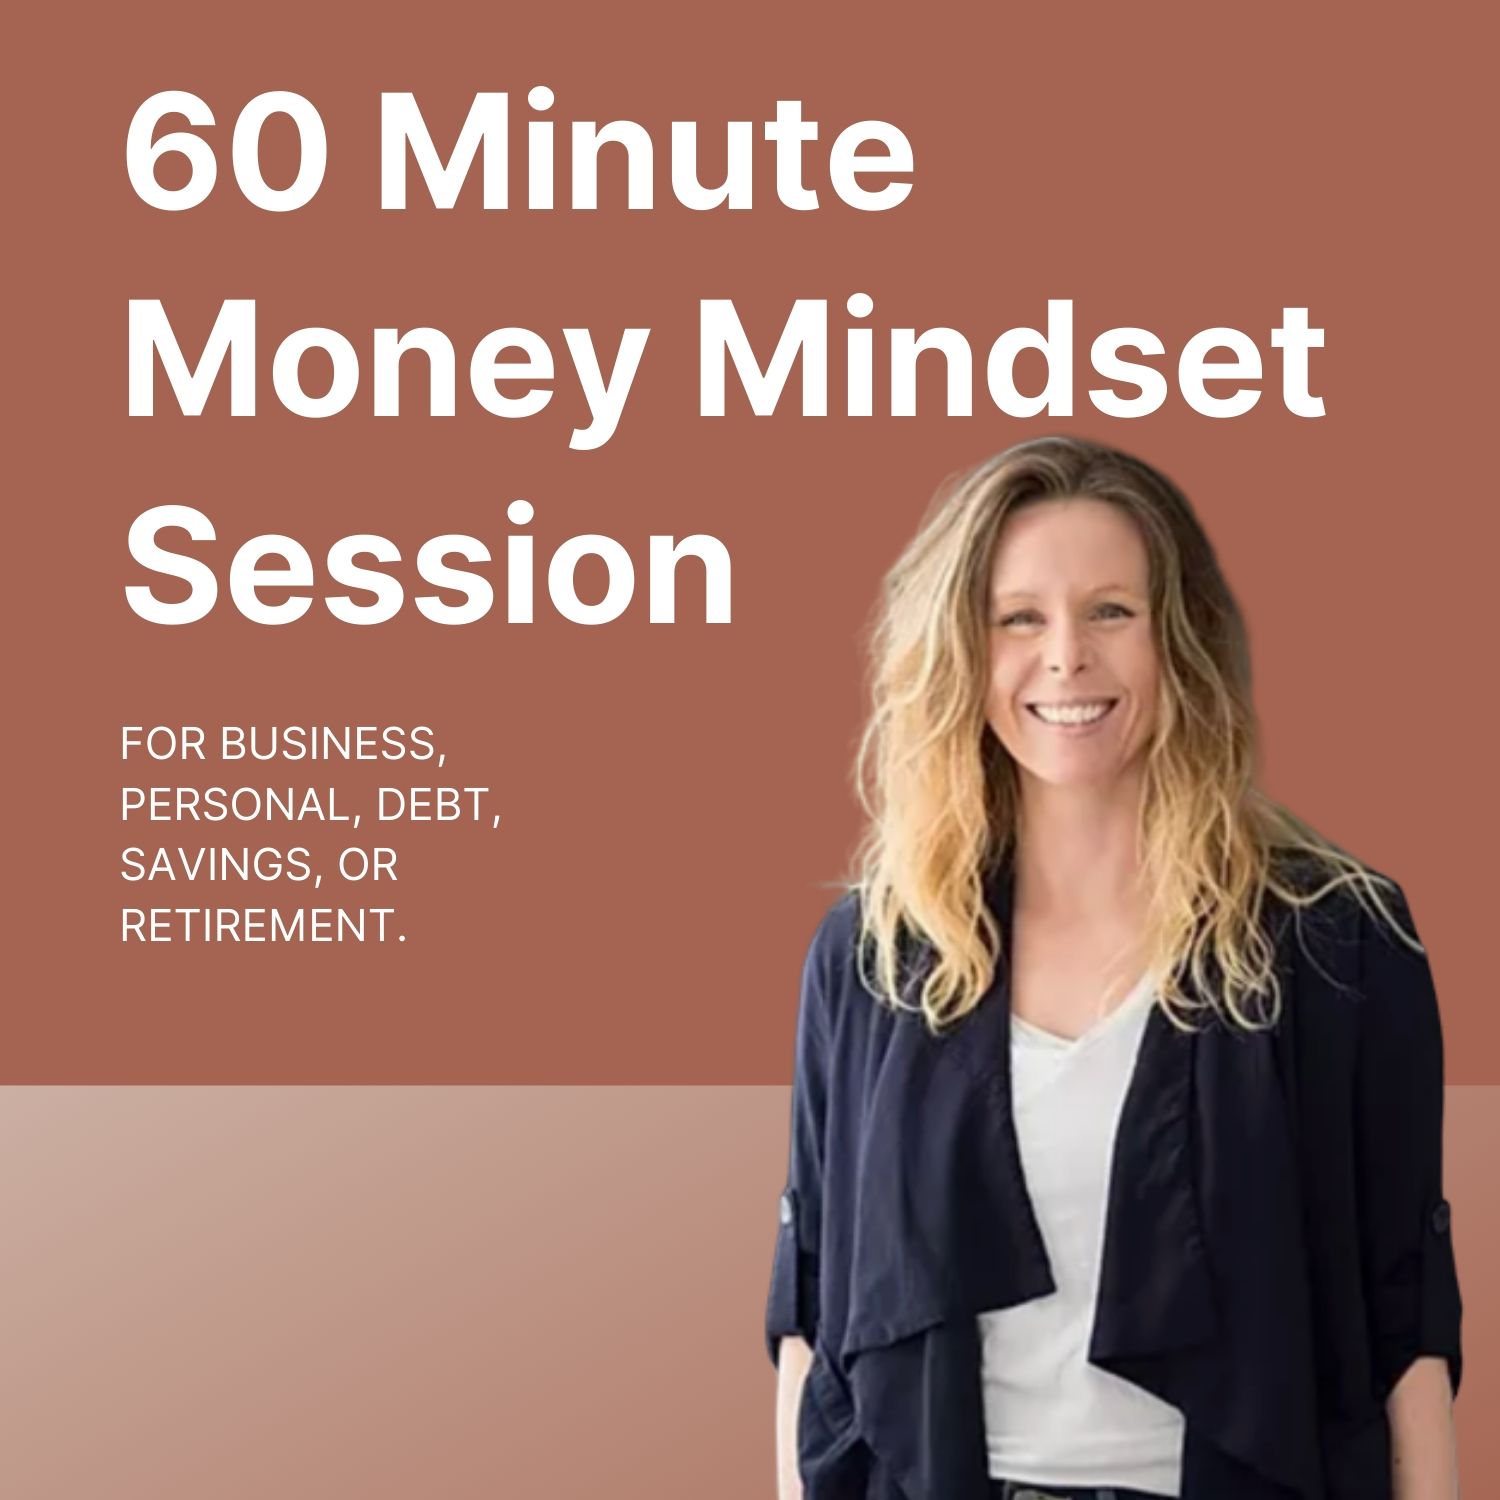 60 Minute Money Mindset Session with Nicole